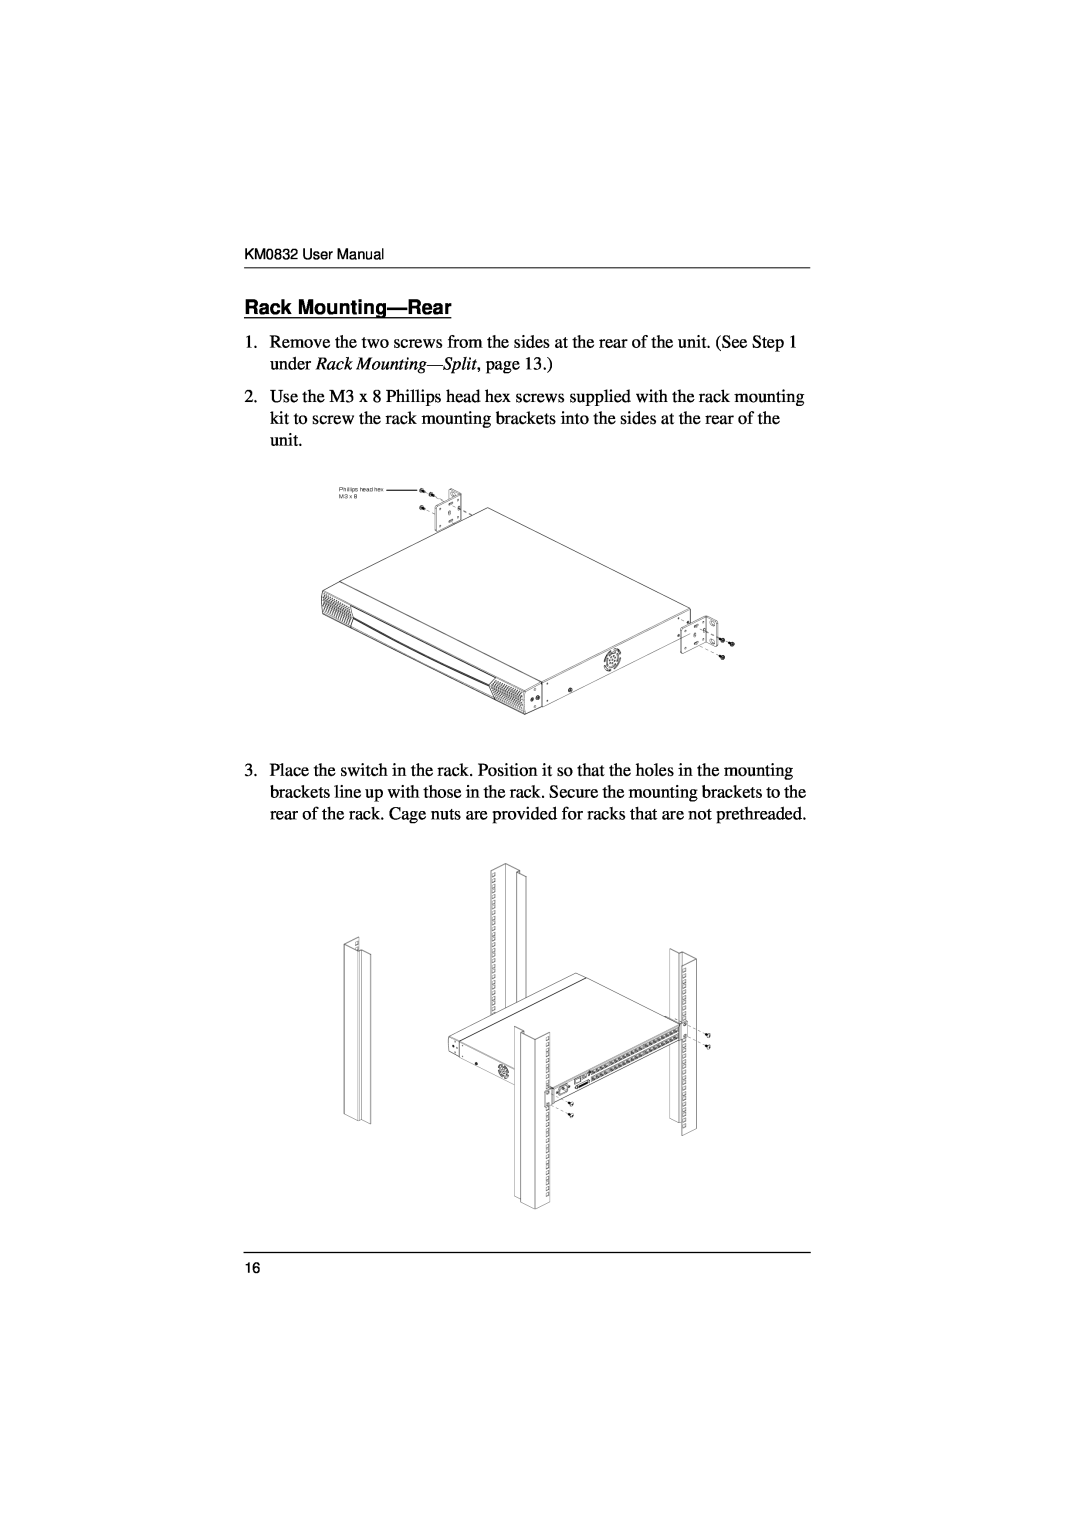 ATEN Technology KM0832 user manual Rack Mounting-Rear 